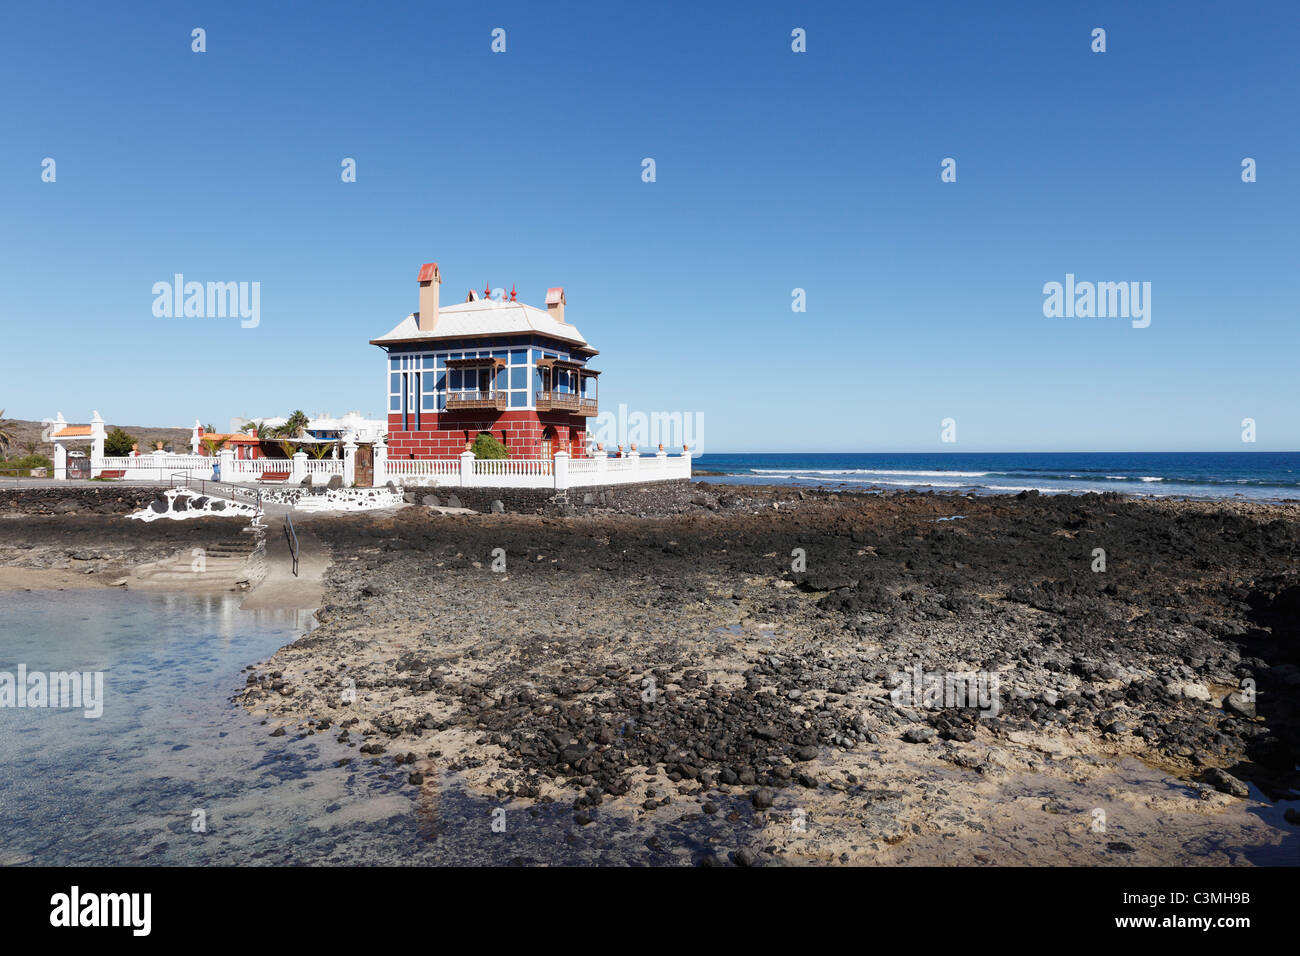 Spain, Canary Islands, Lanzarote, Arrieta, Blue House at sea side Stock Photo